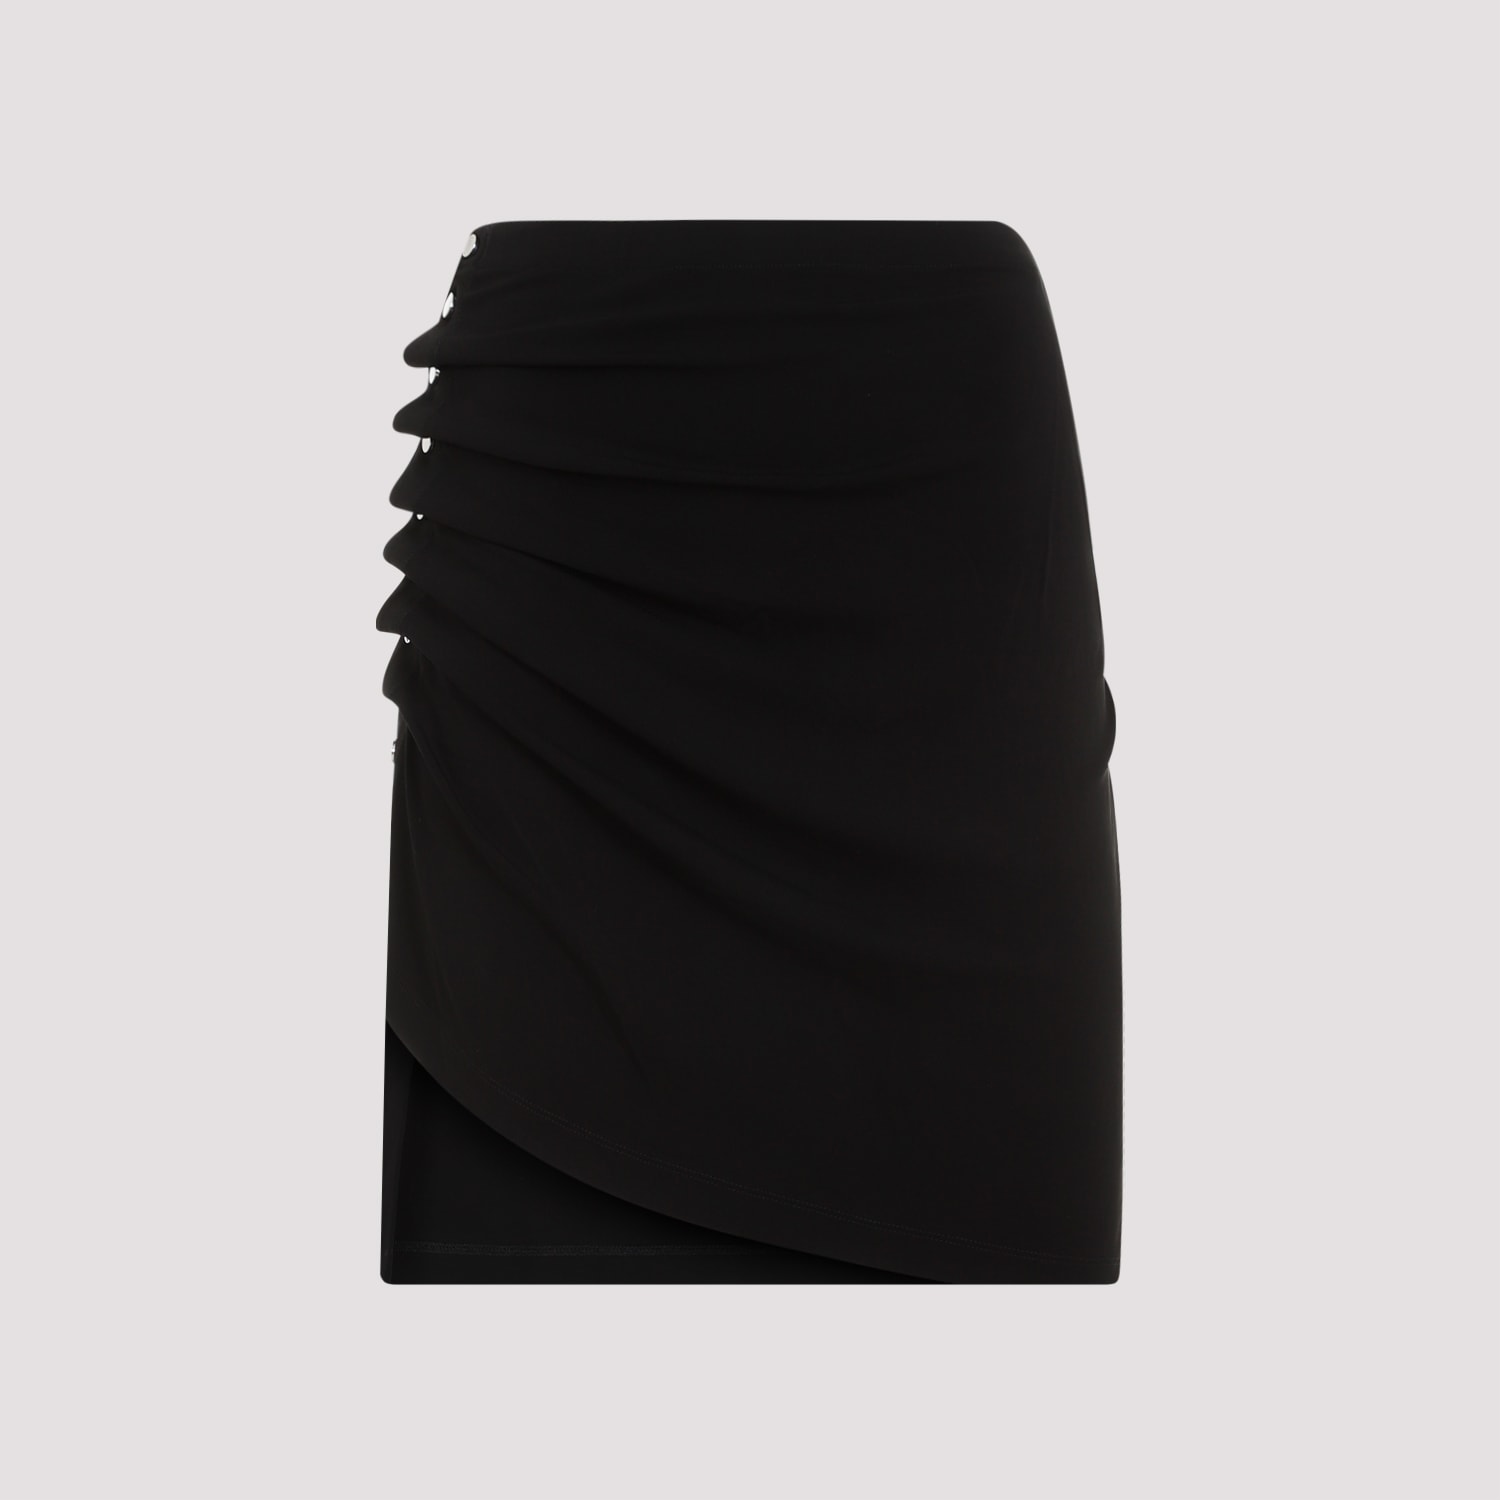 Paco Rabanne Mini Skirt